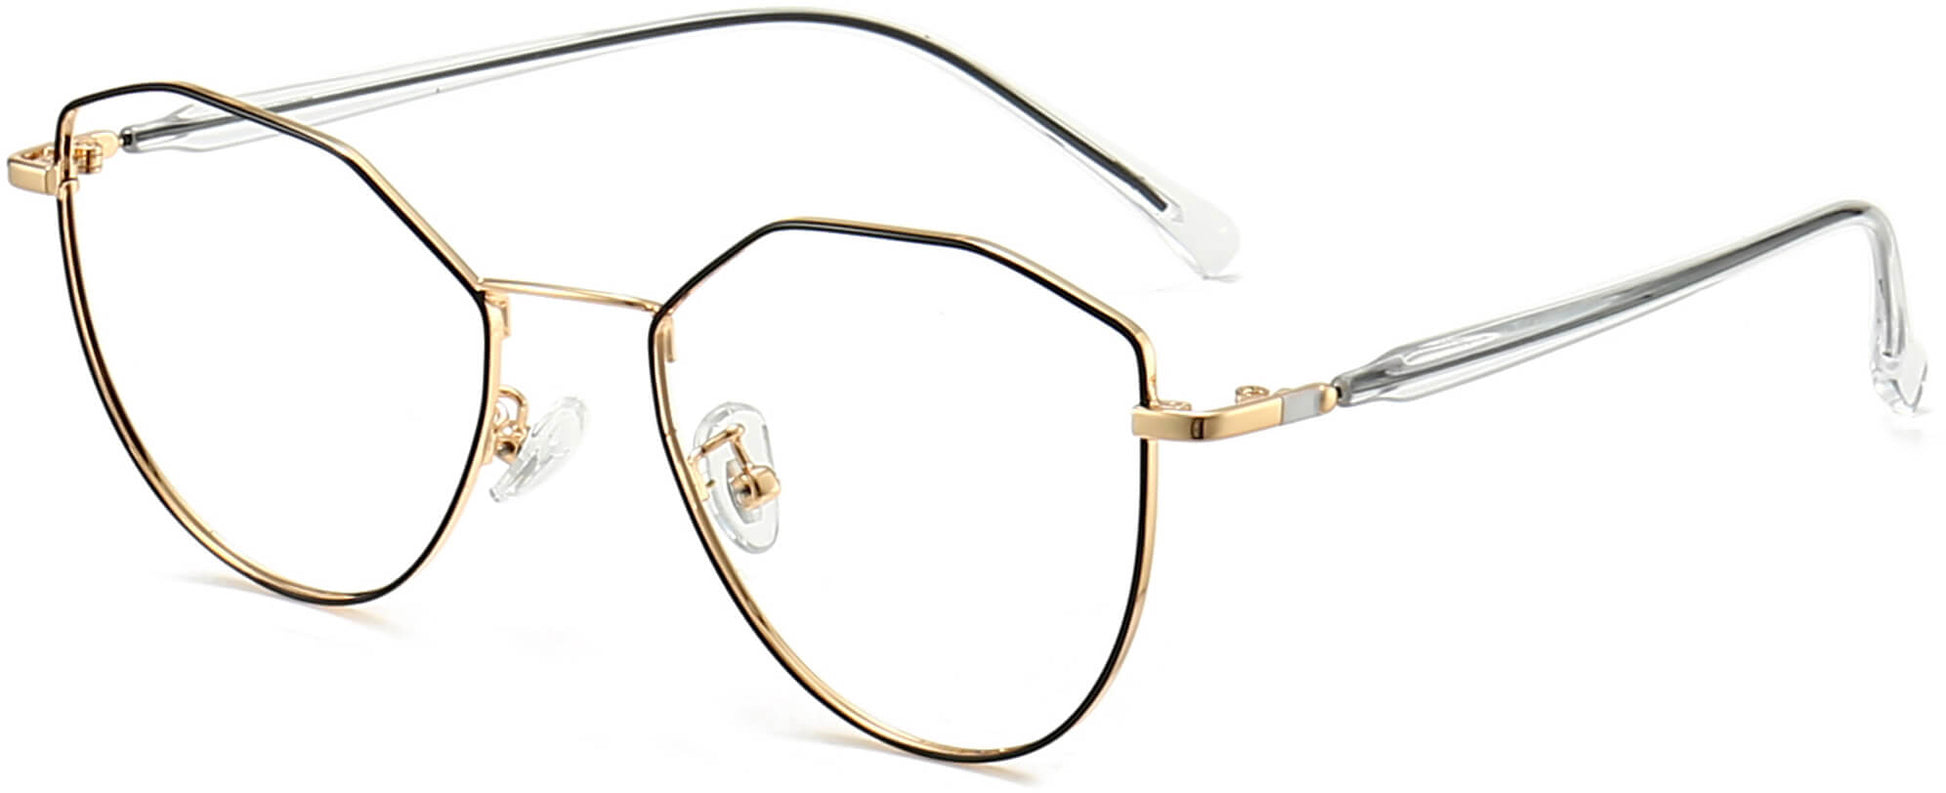 Marina Geometric Black Eyeglasses from ANRRI, angle view